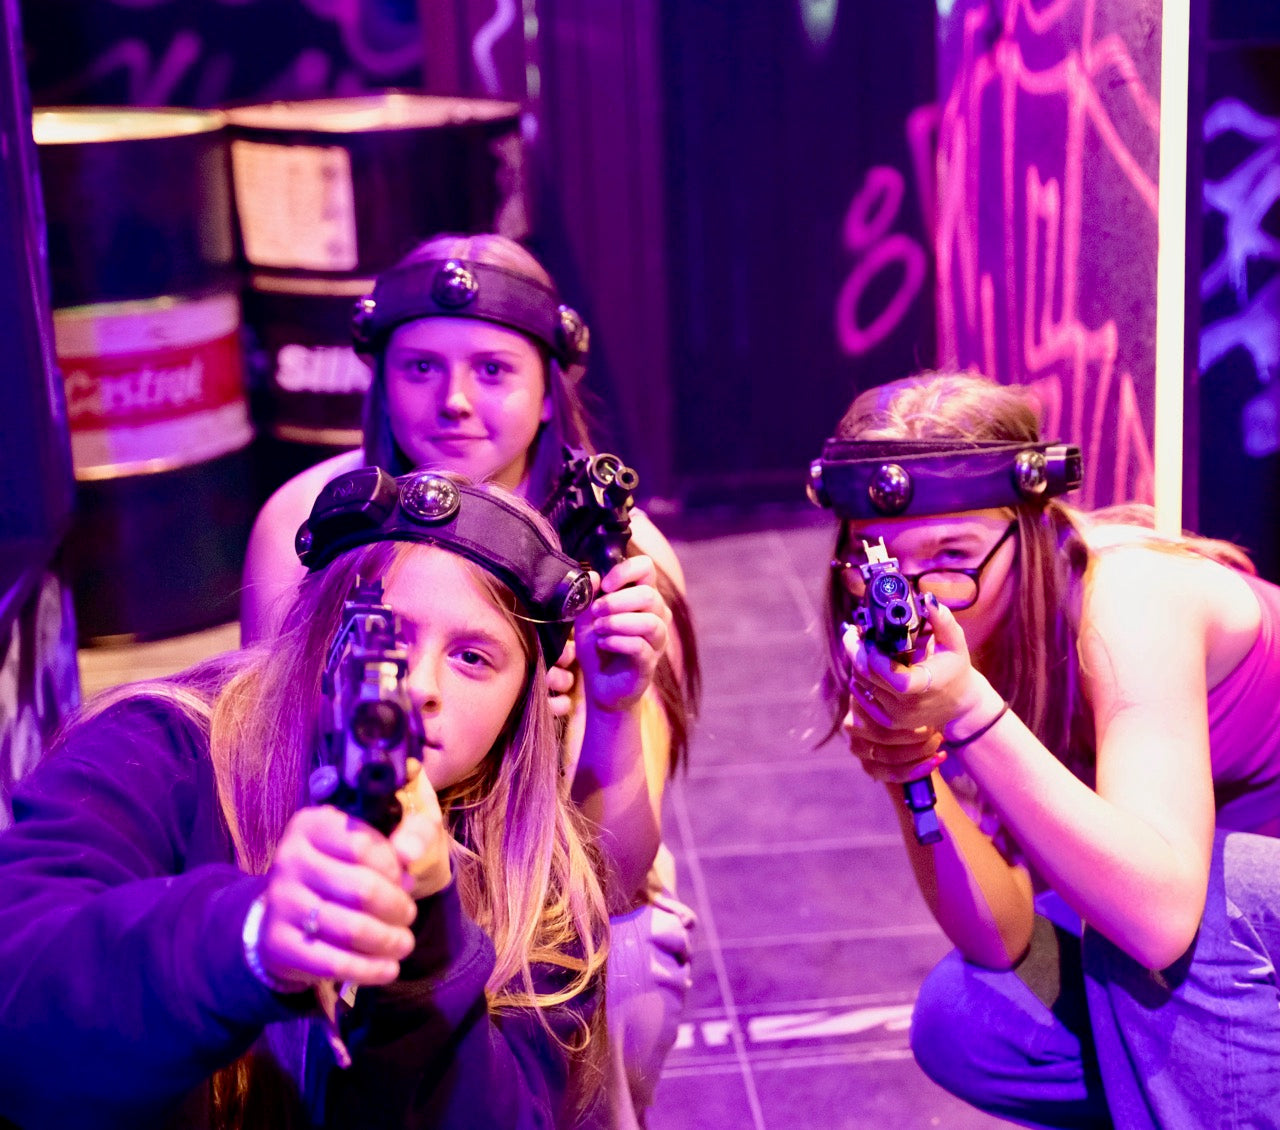 Three girls aiming towards the camera with laser tag guns